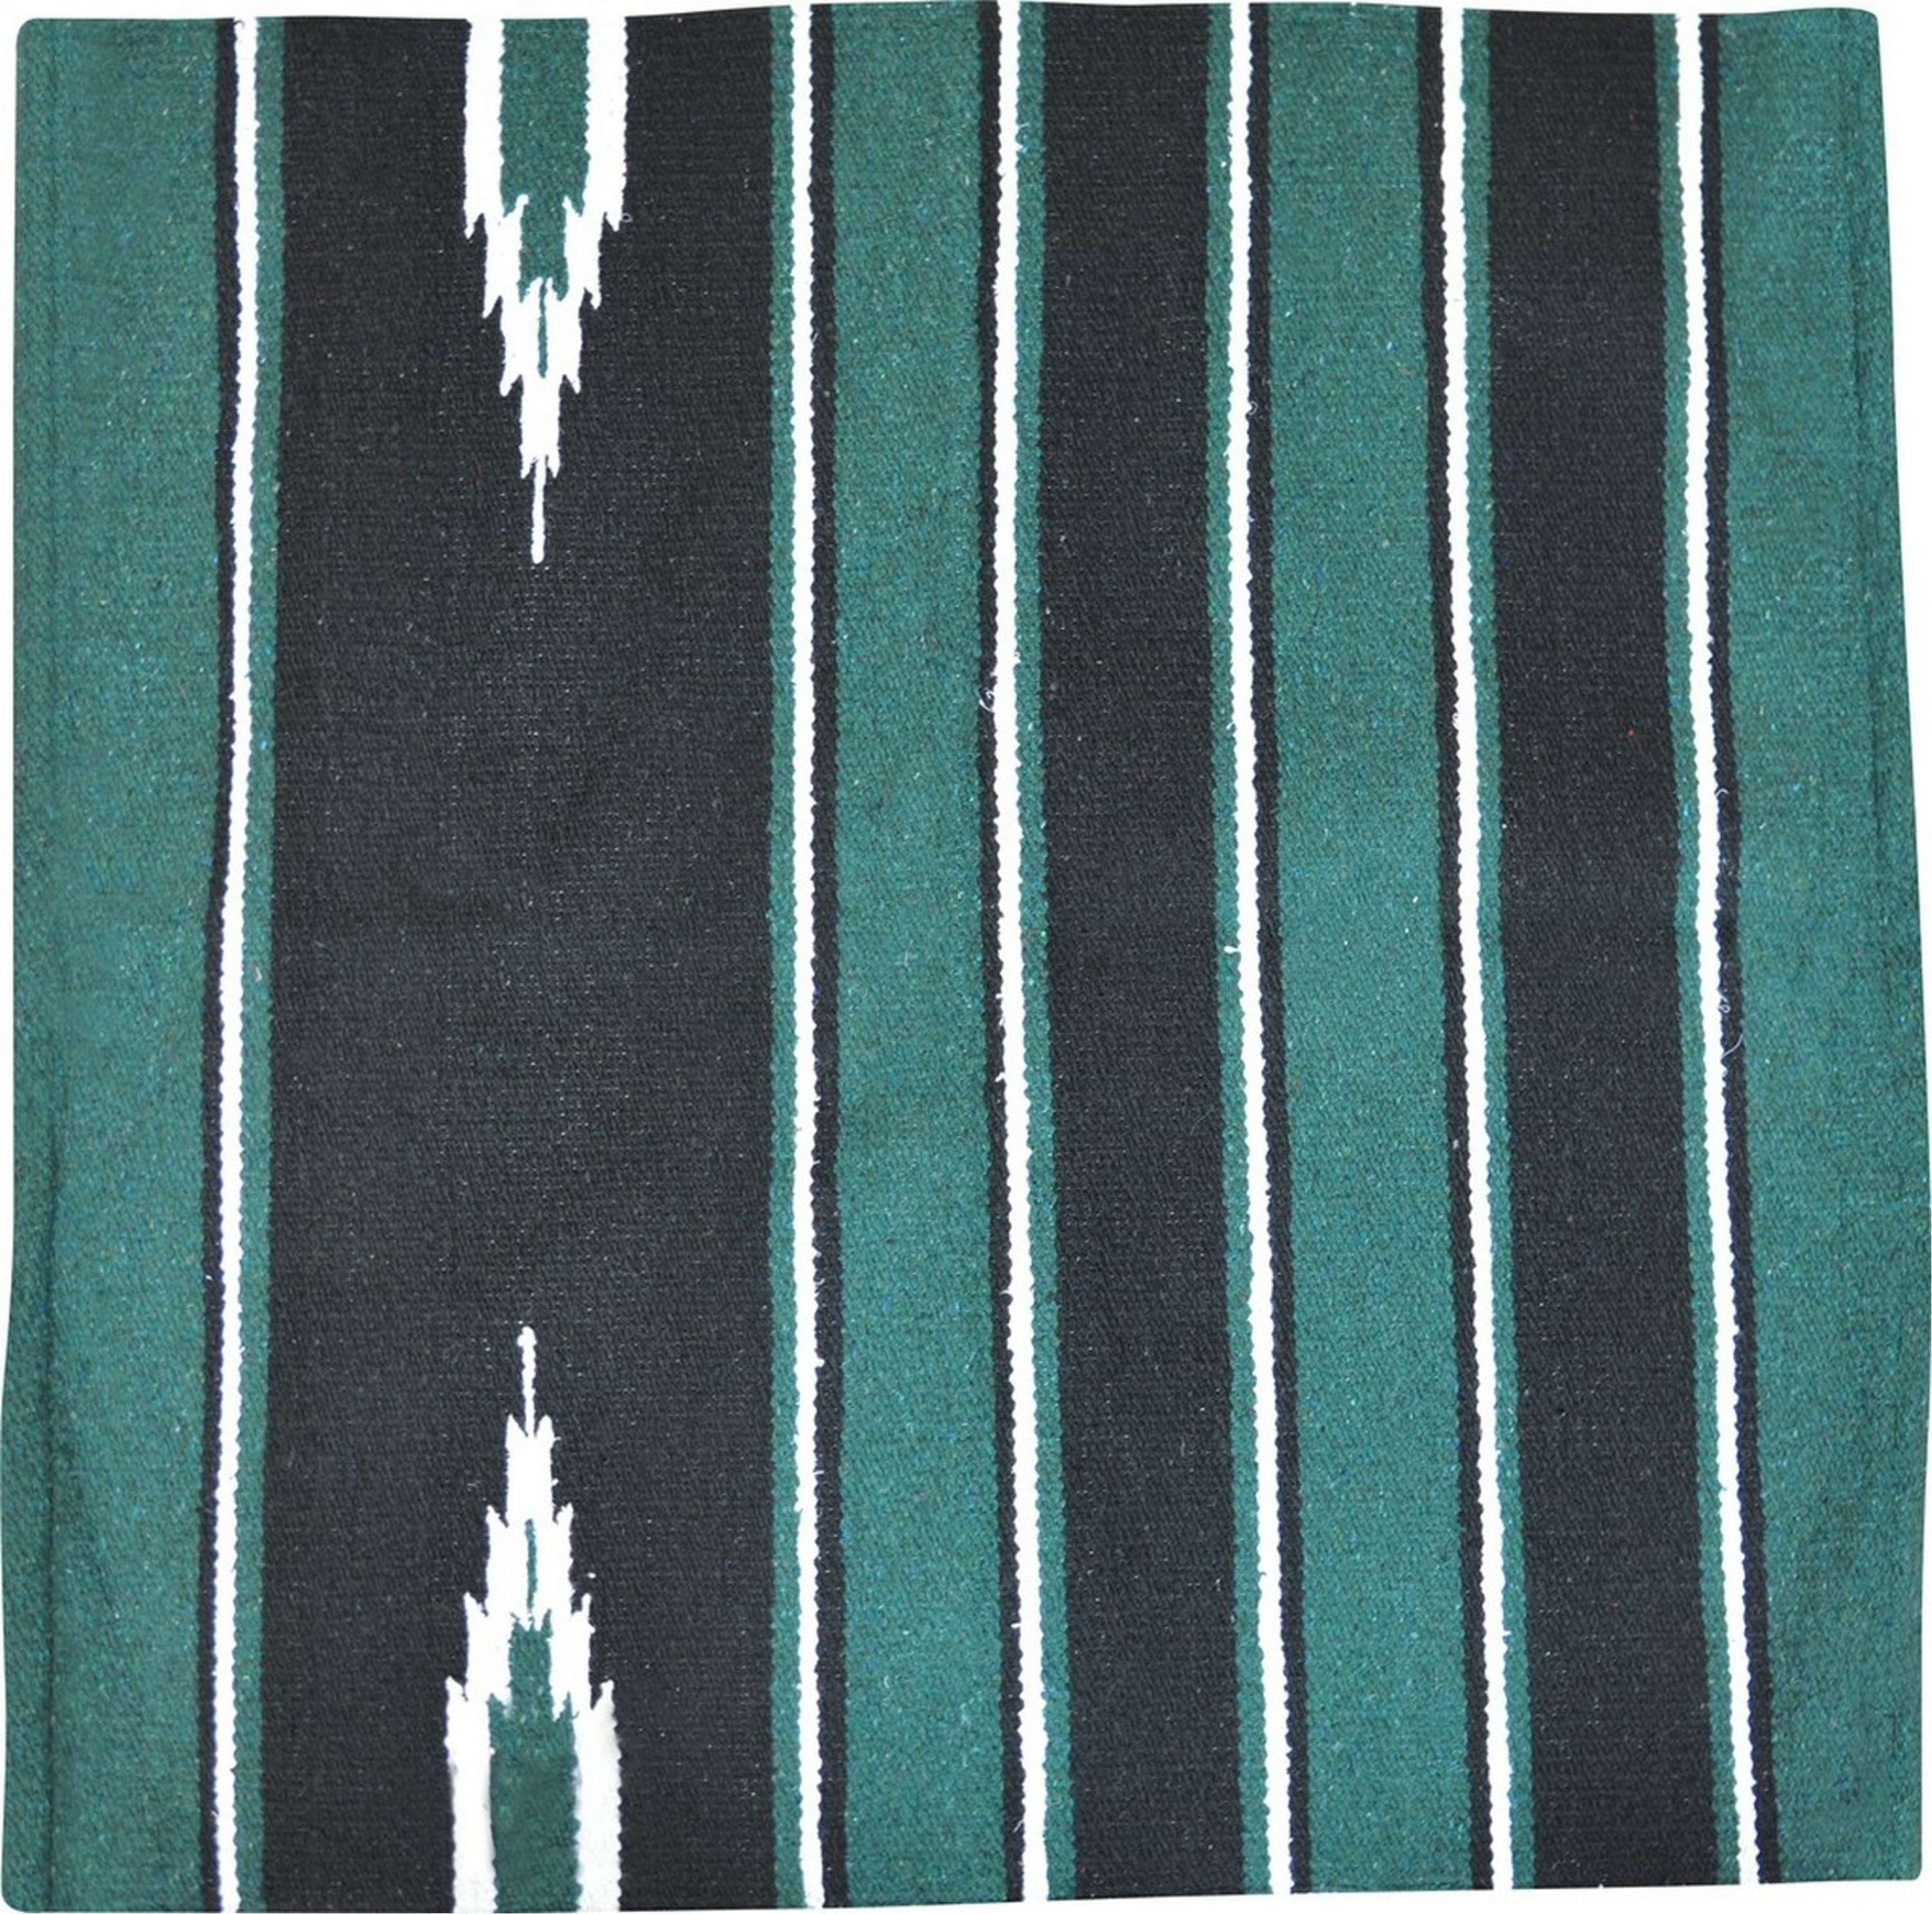 Randol's Navajo Show Blanket Vert/Noir/Blanc